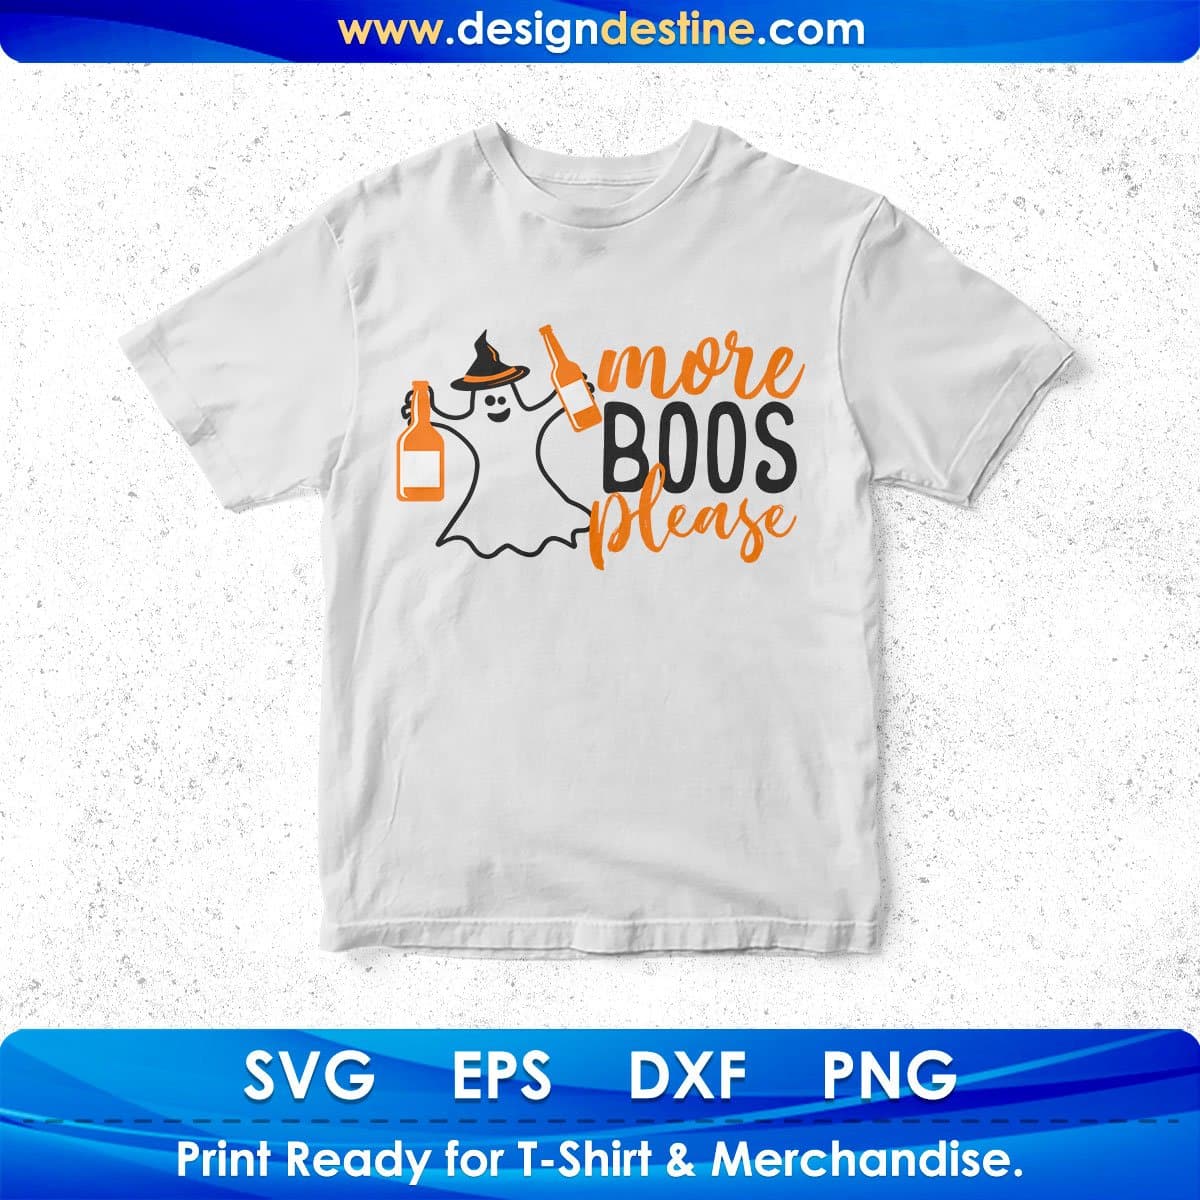 Read More Boooooks SVG Cut File - Buy t-shirt designs